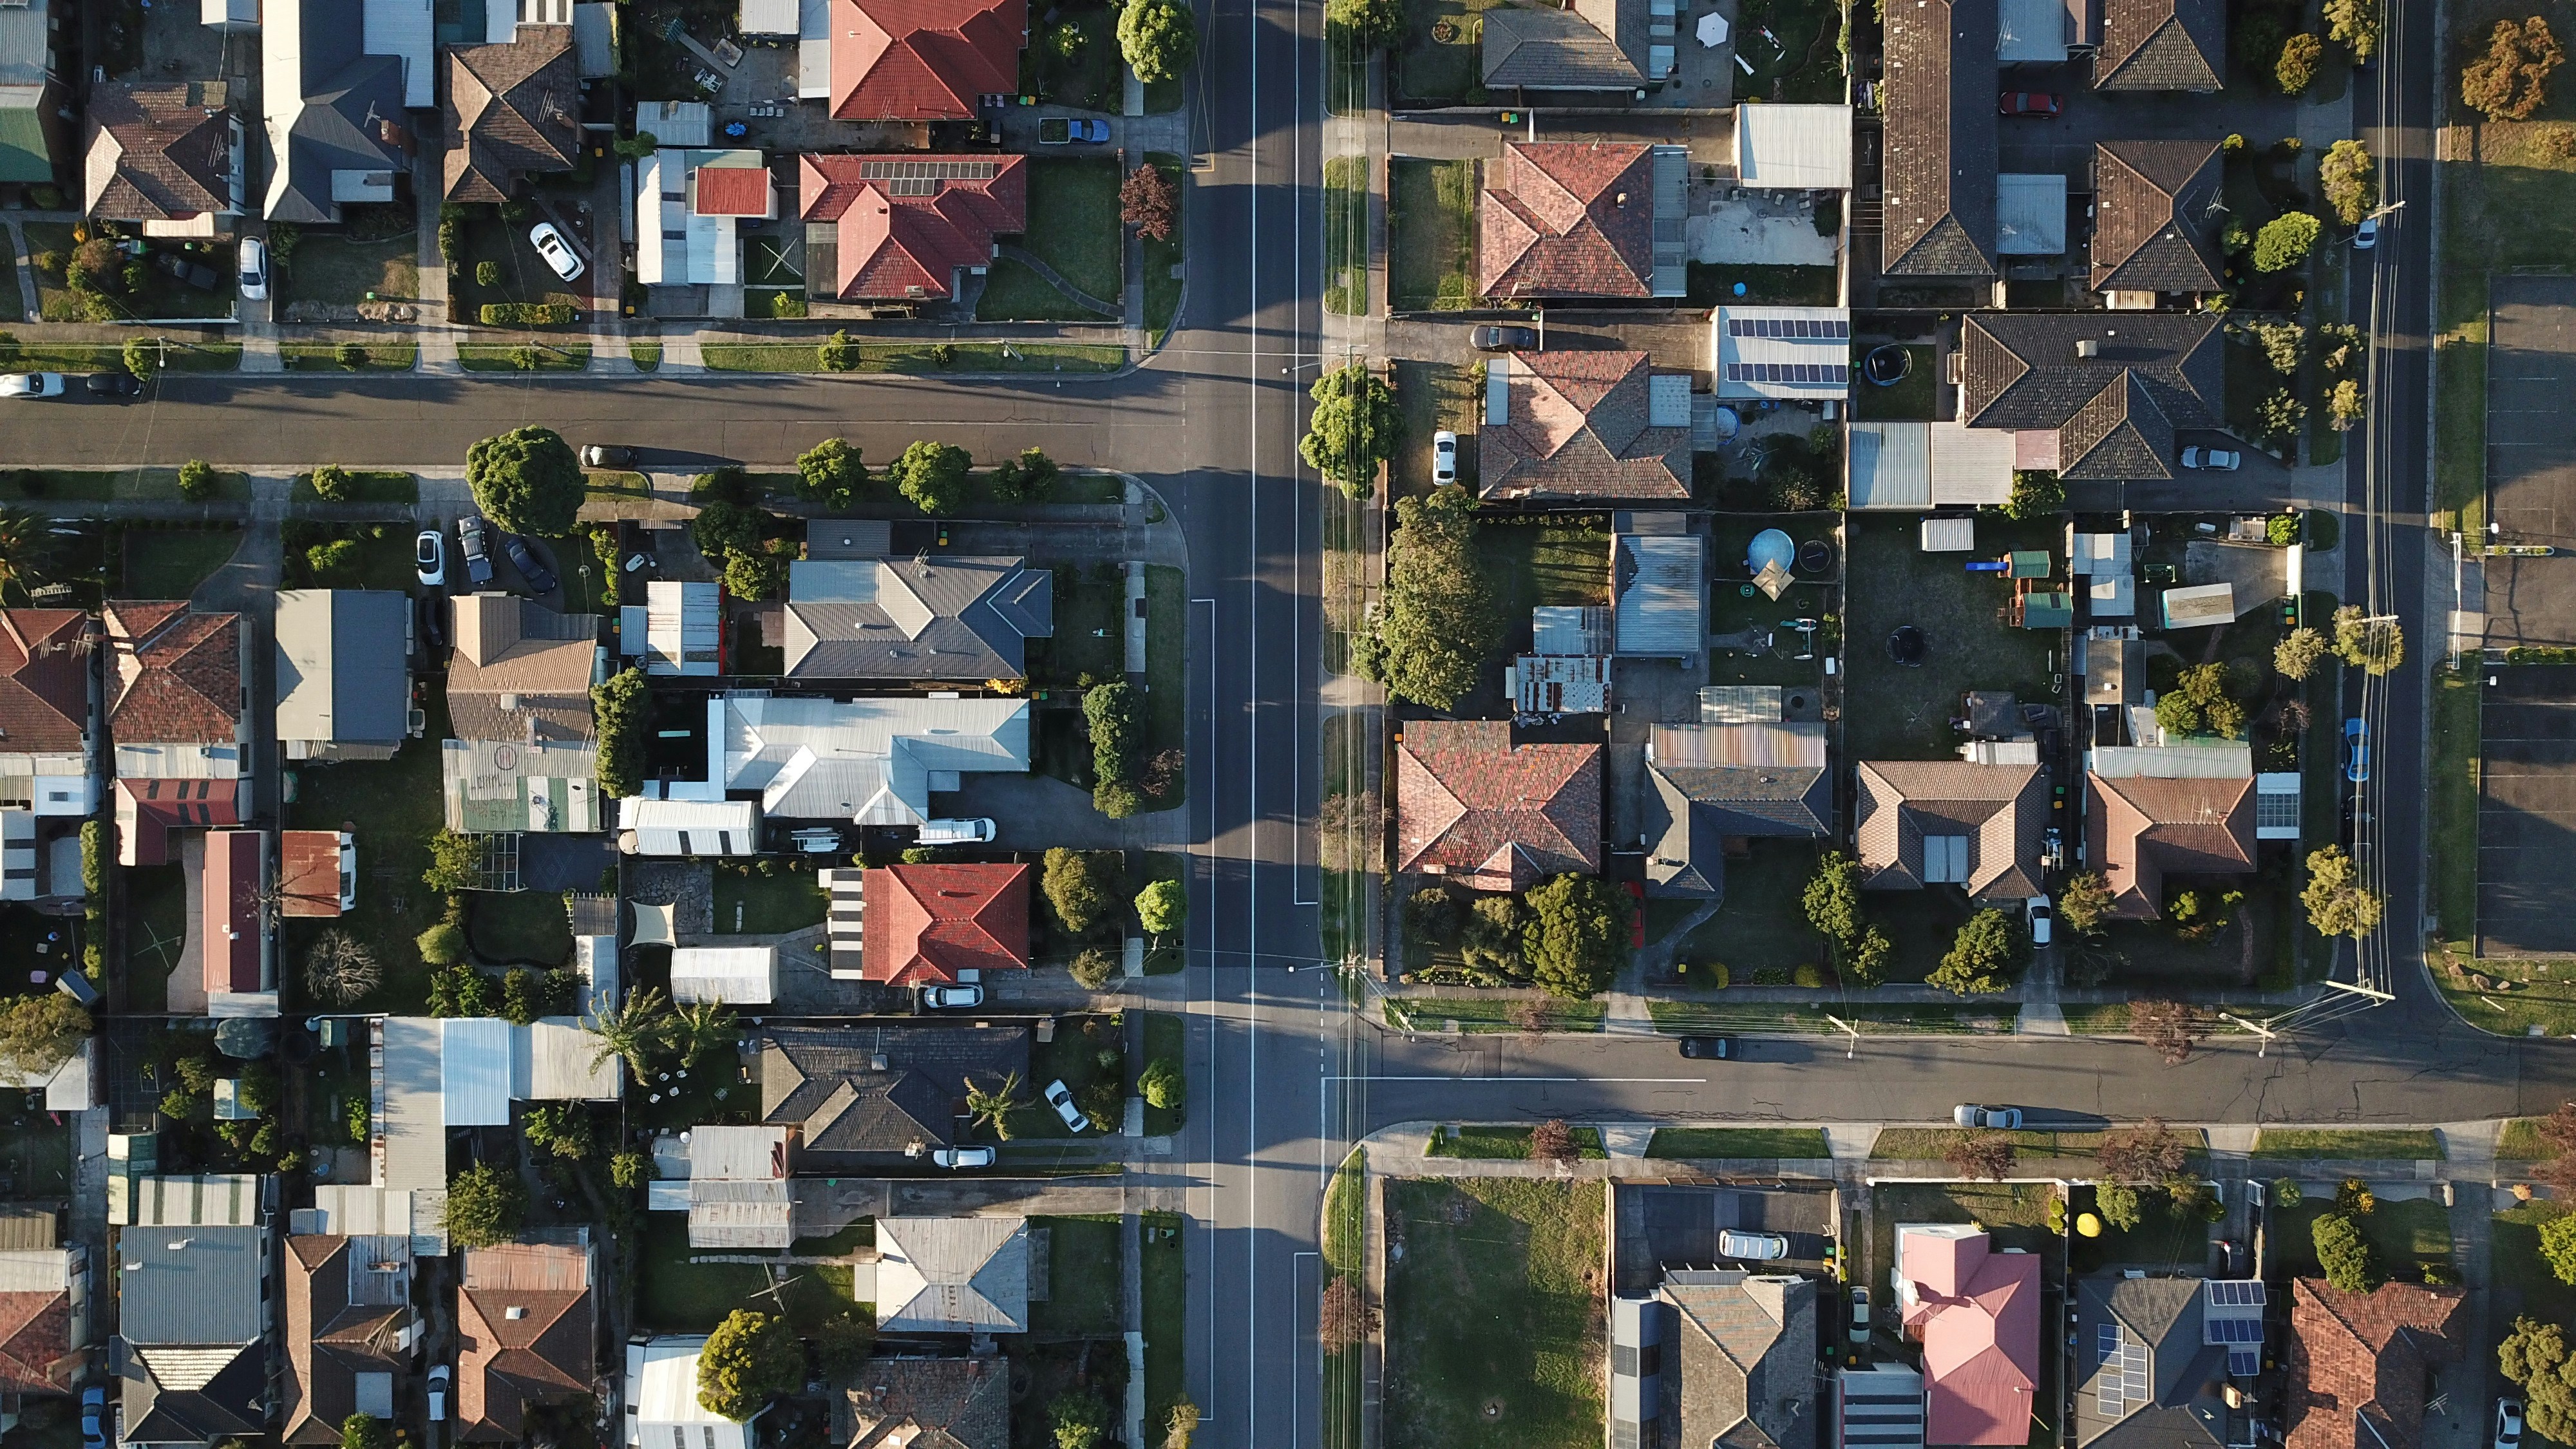 A birds-eye view of suburbia